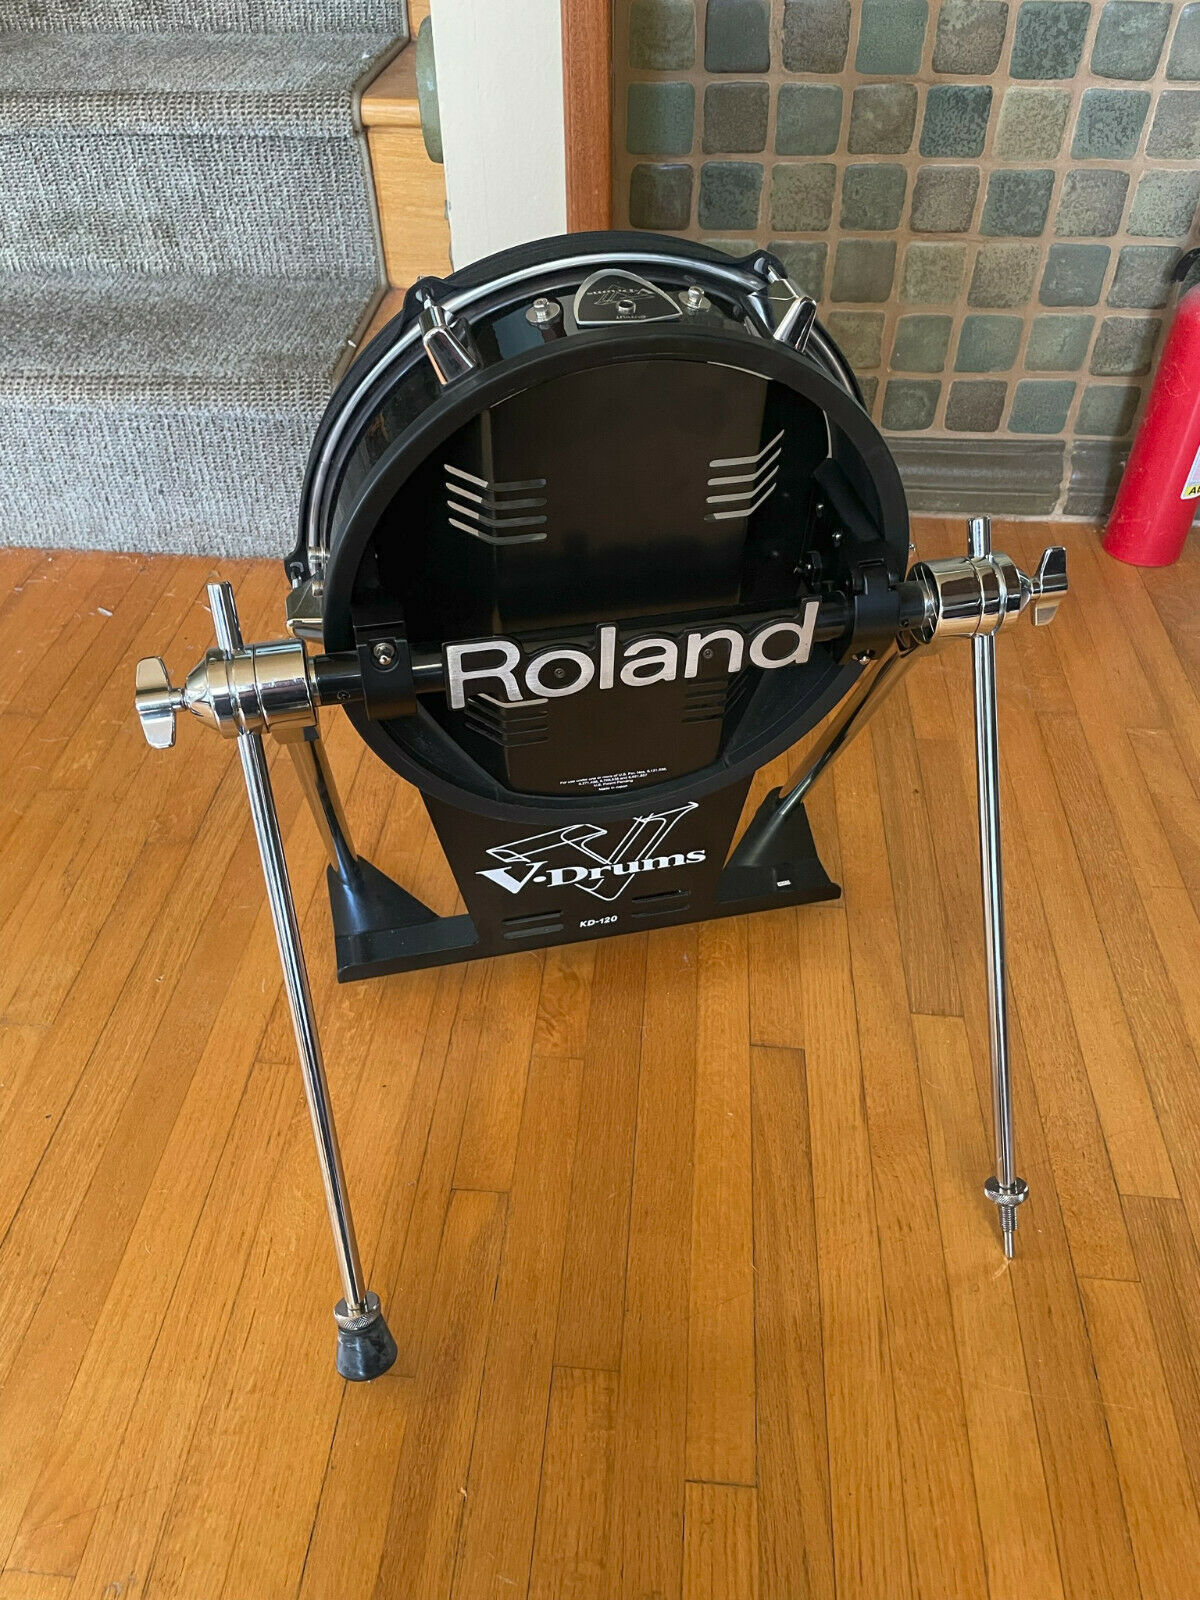 Roland KD-120 Kick Bass Drum Trigger Kd120 BLACK – Blakes Drum Shop